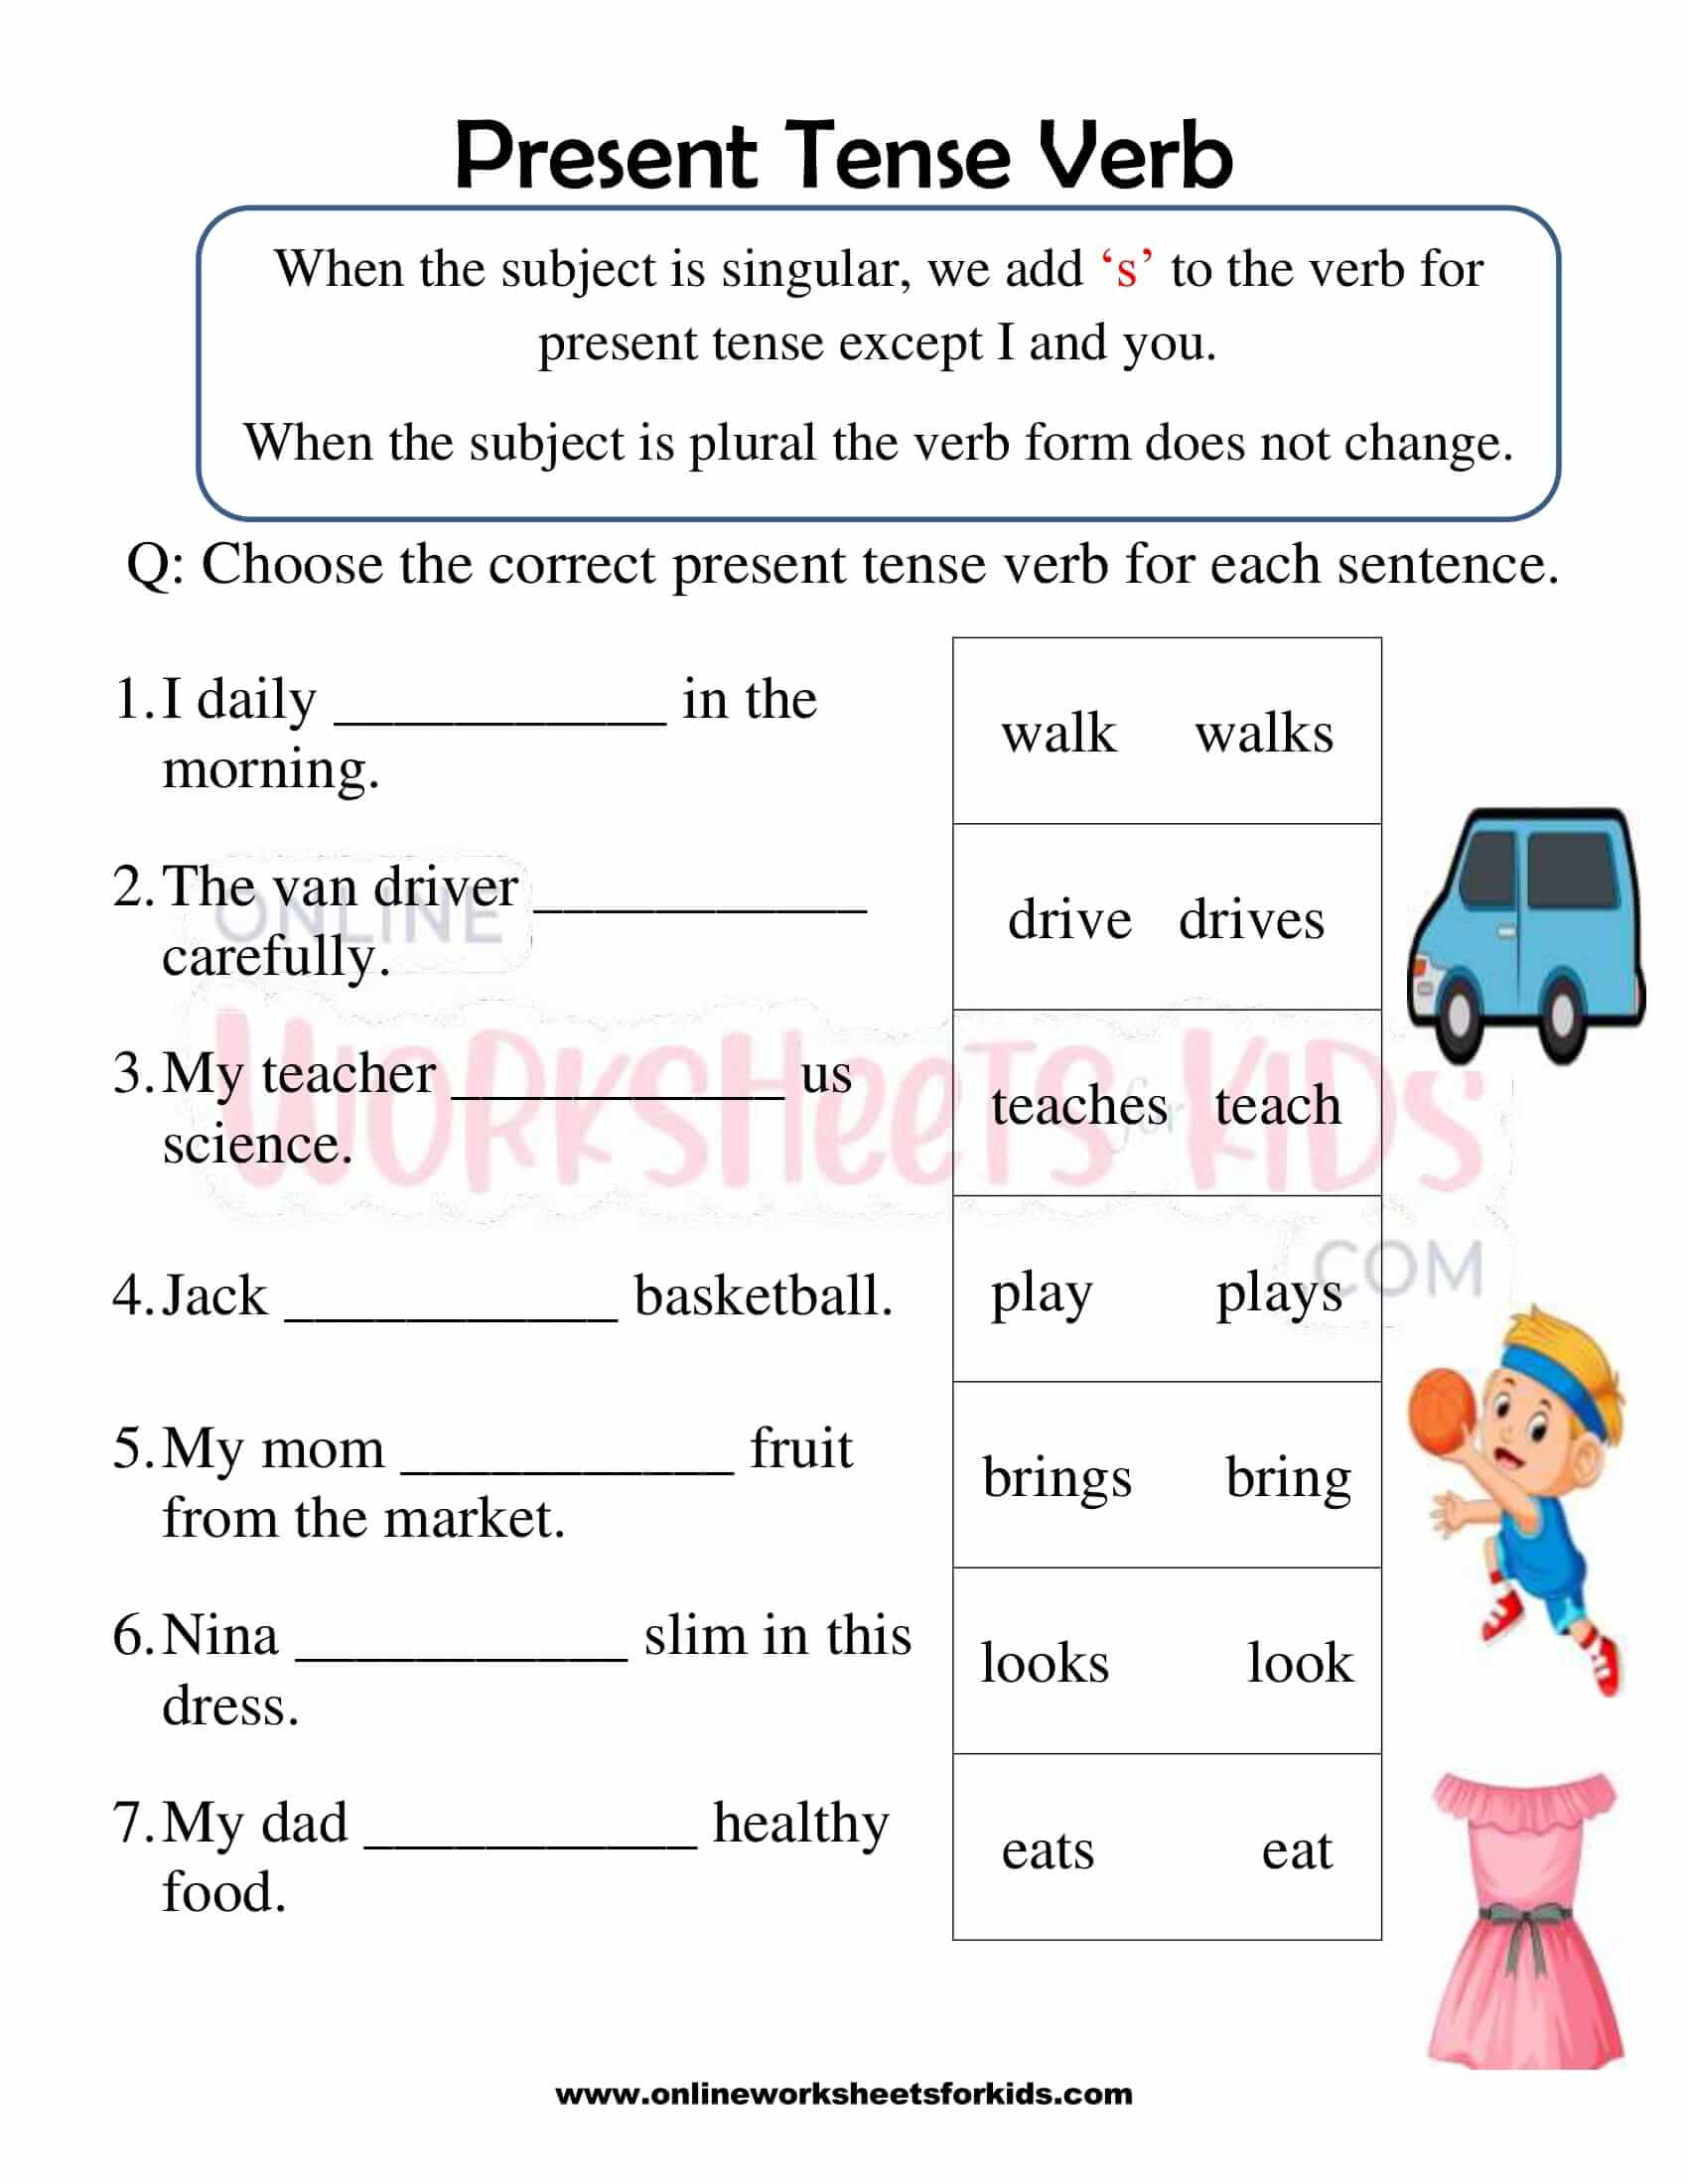 grade-5-verbs-worksheets-k5-learning-correcting-verb-tenses-worksheets-k5-learning-lillie-church